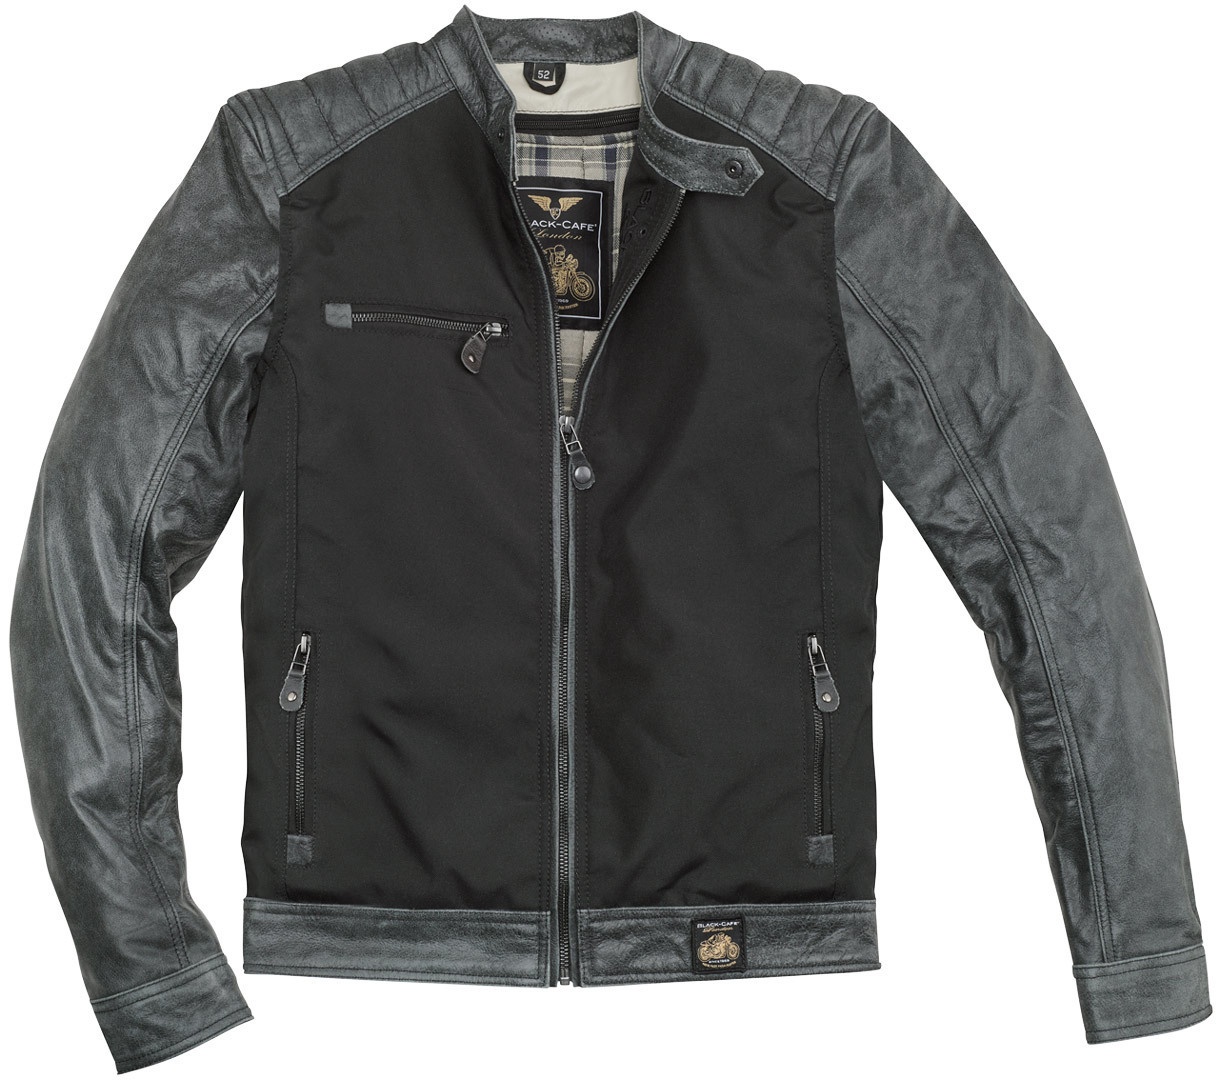 Black-Cafe London Johannesburg Motorrad Leder- / Textiljacke, schwarz-grau, Größe 56